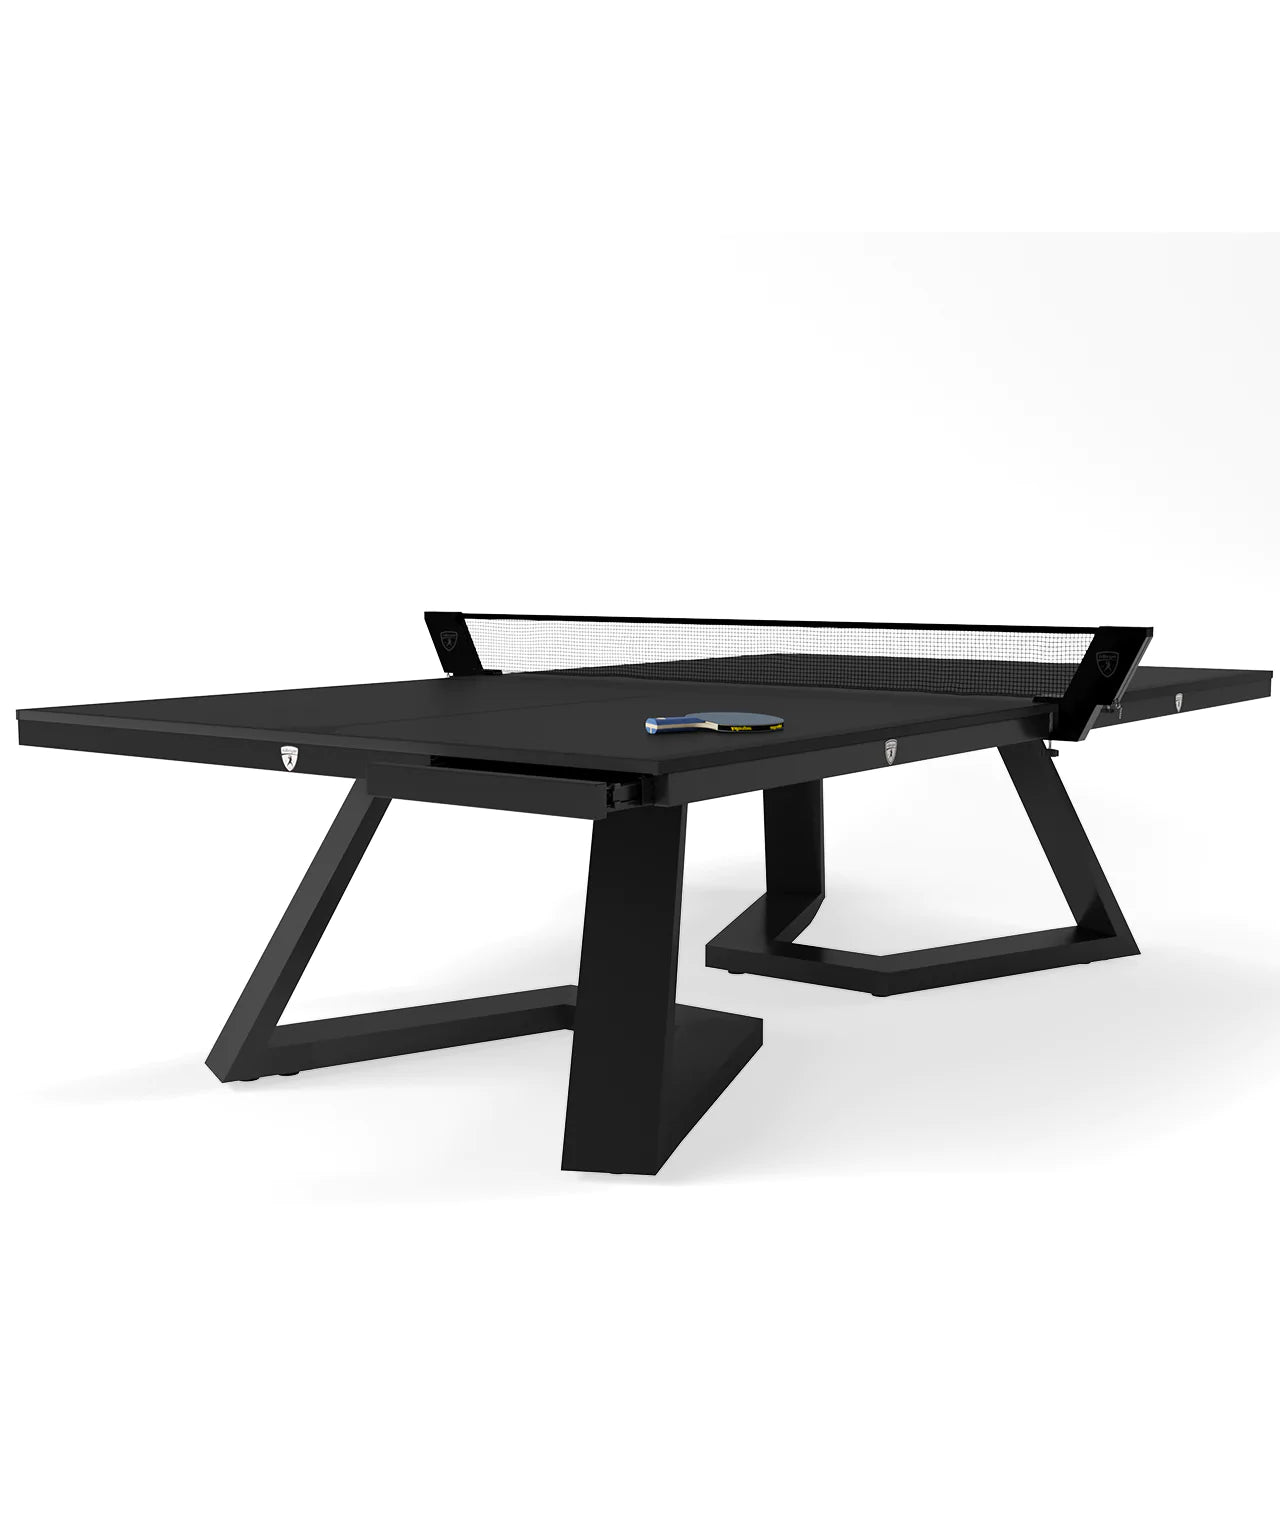 Killerspin SVR daVinci Indoor Table Tennis Table